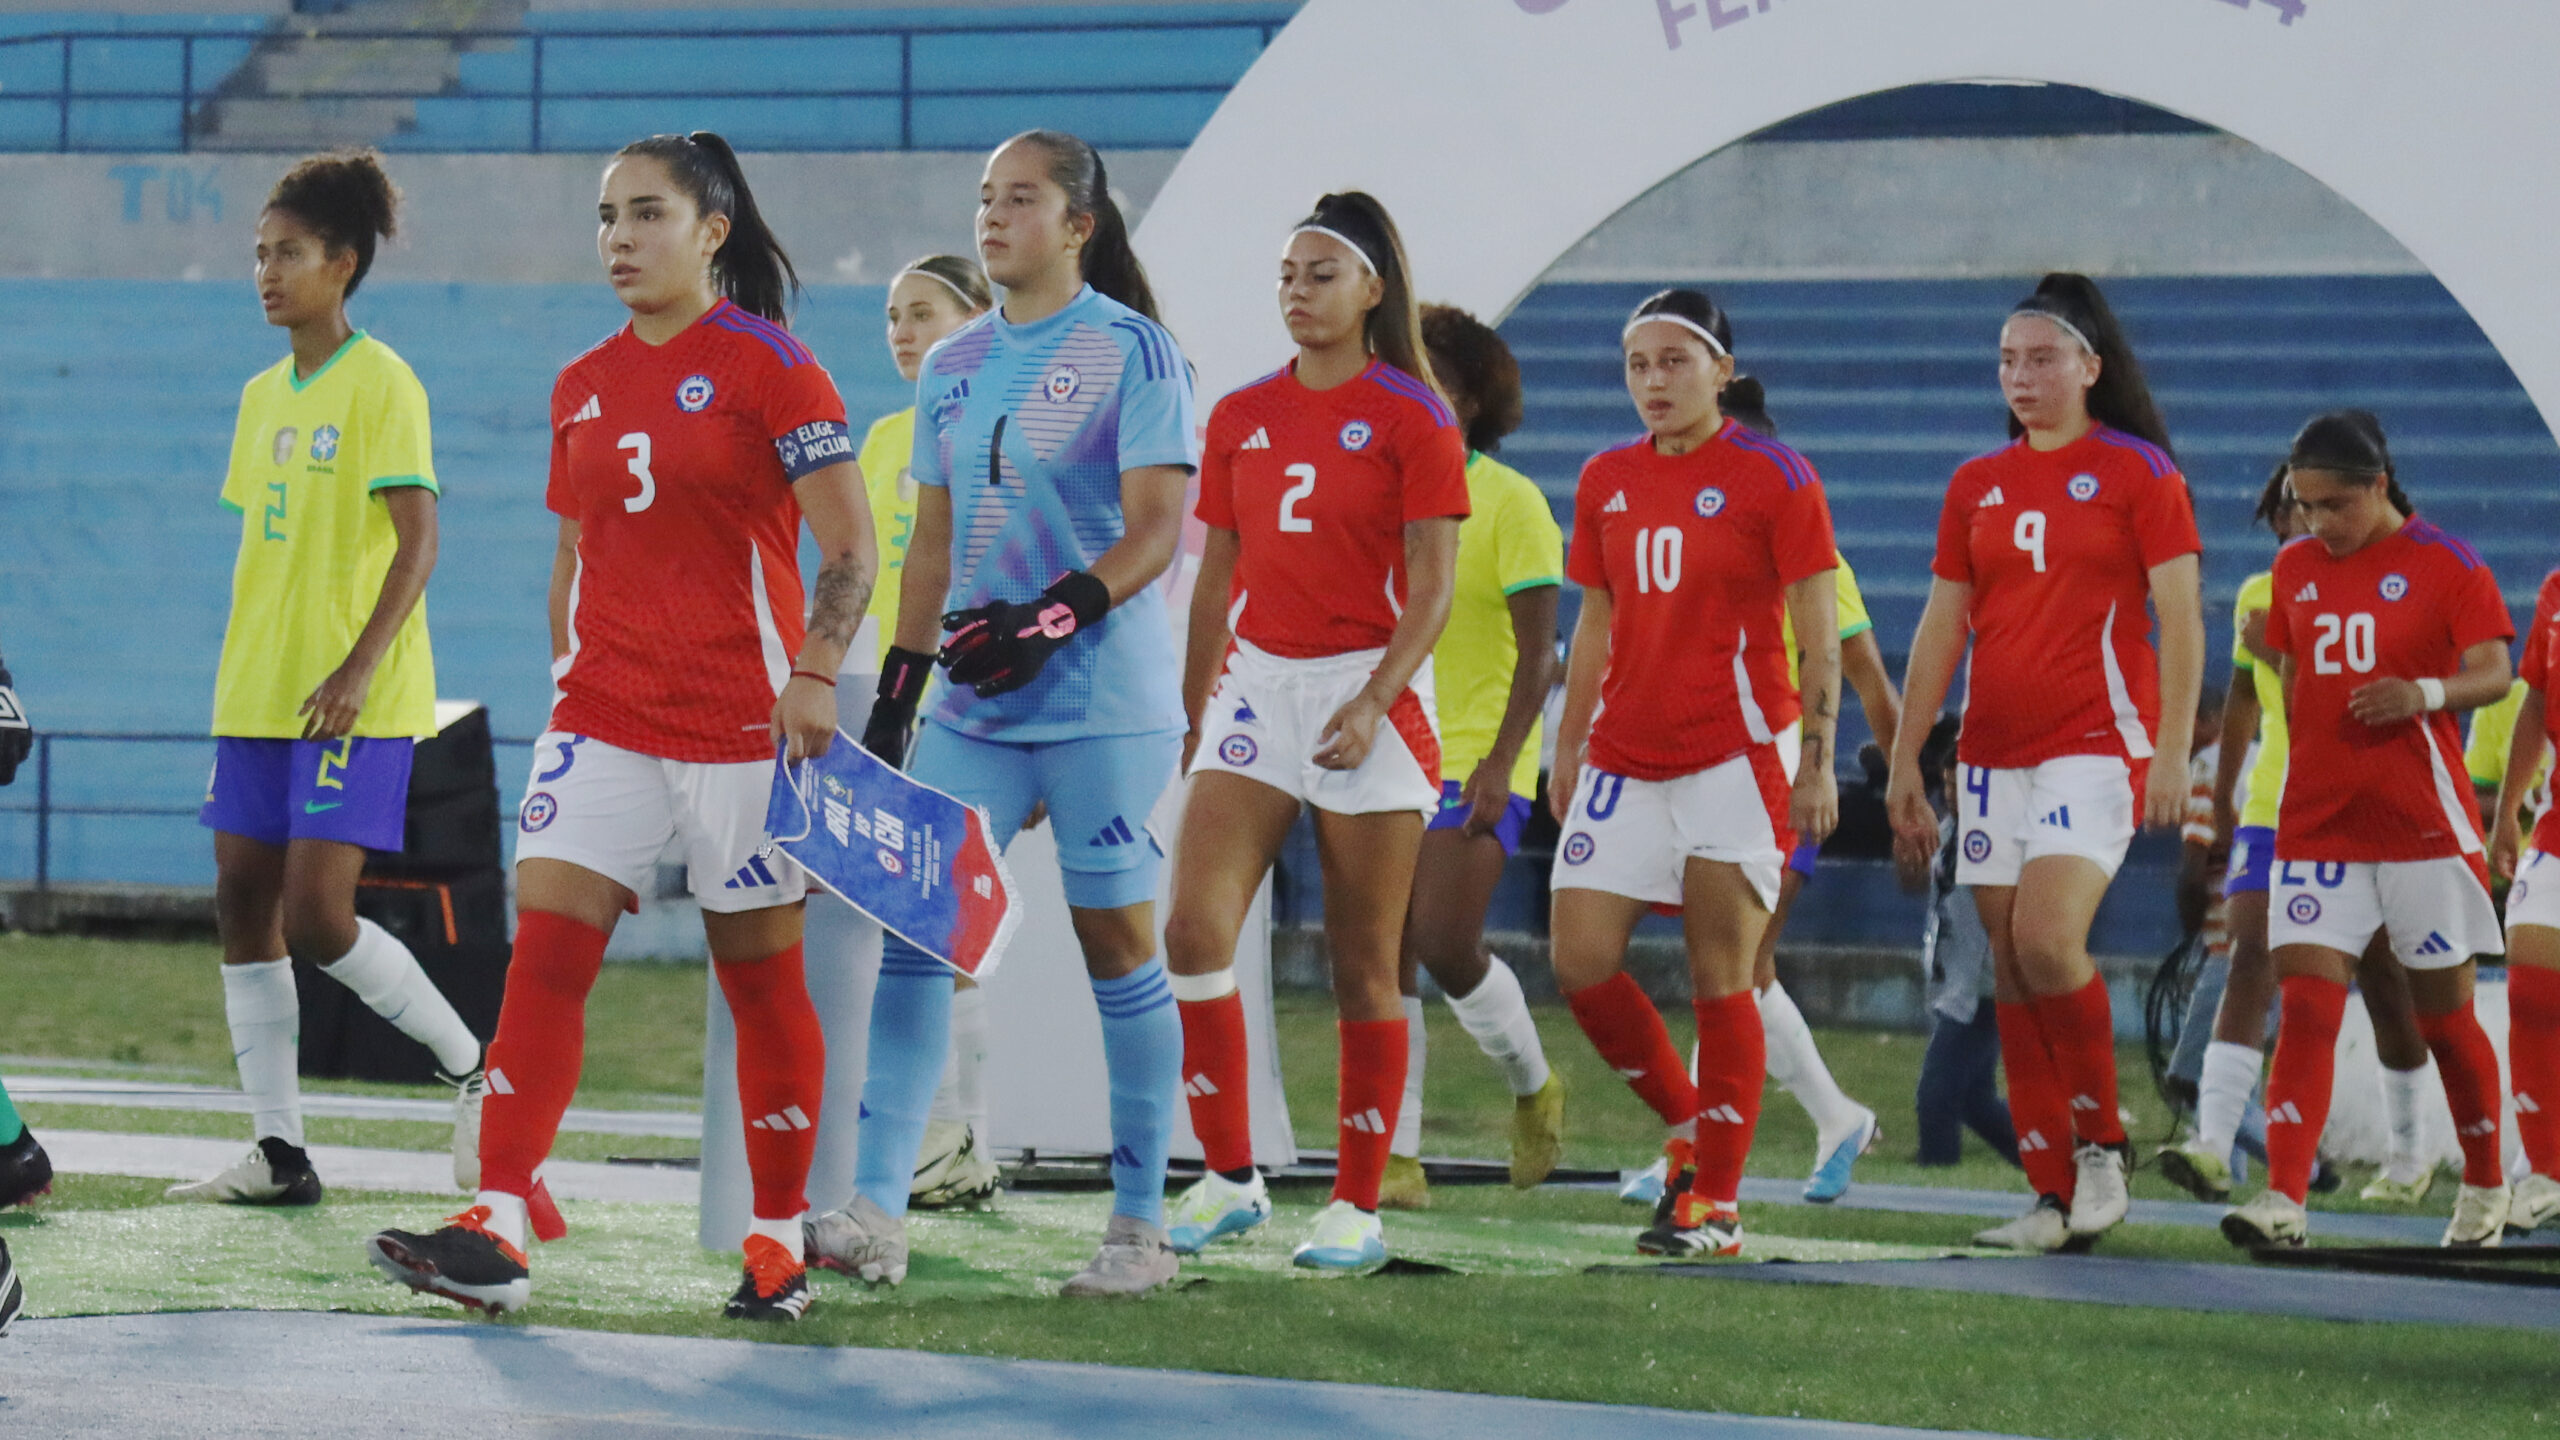 Anaís Cifuentes levanta a La Roja Sub-20: “Queremos clasificar al Mundial”